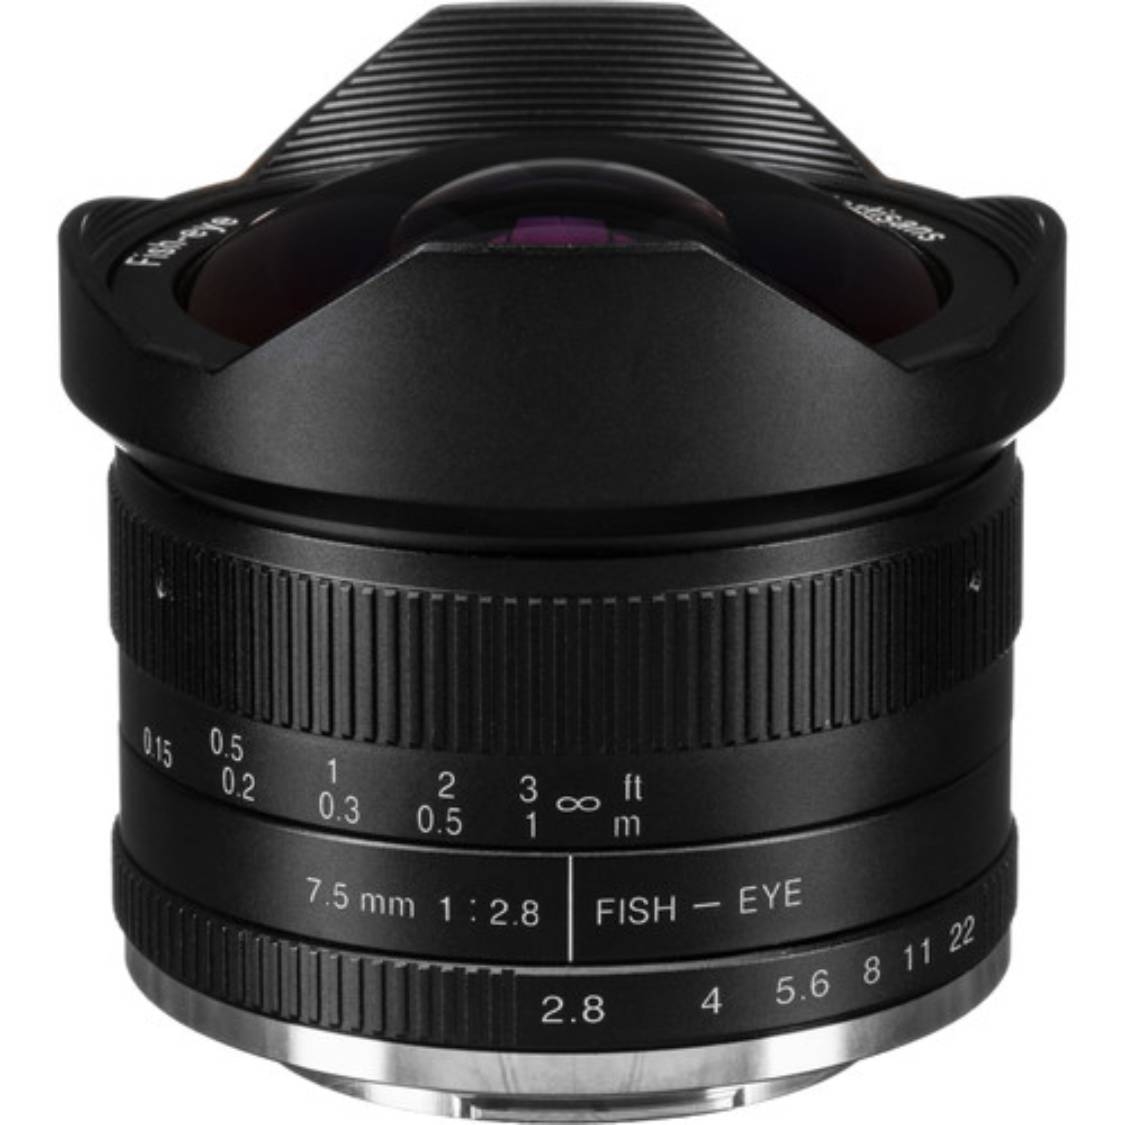 7artisans 7.5mm f/2.8 Fisheye Lens for Fuji X